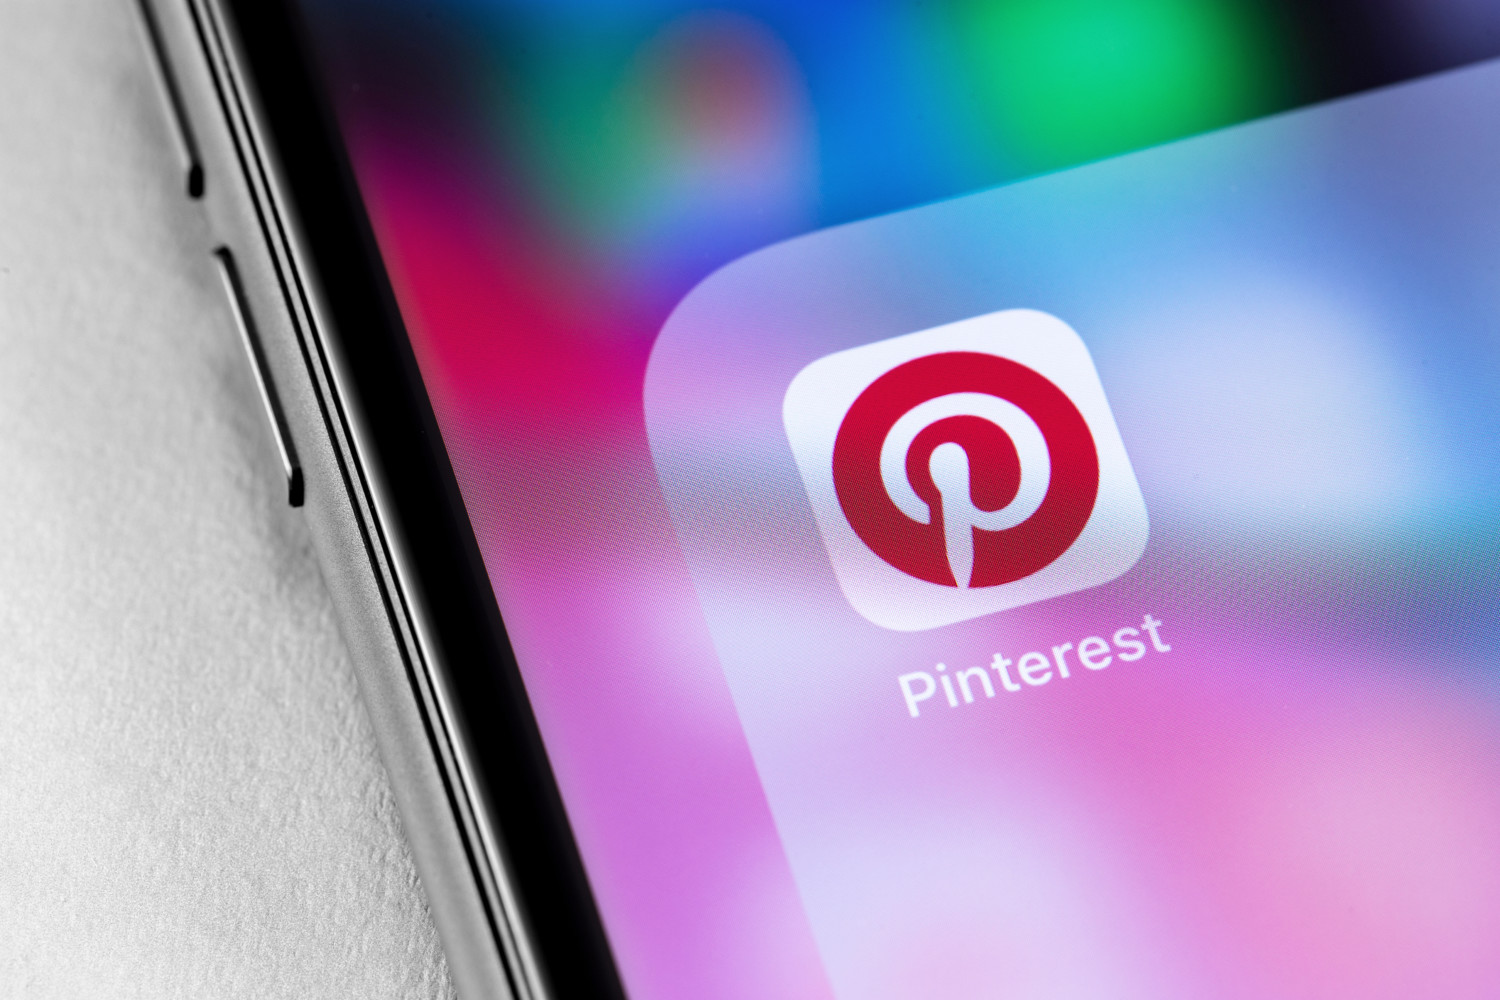 Pinterest icon on smartphone